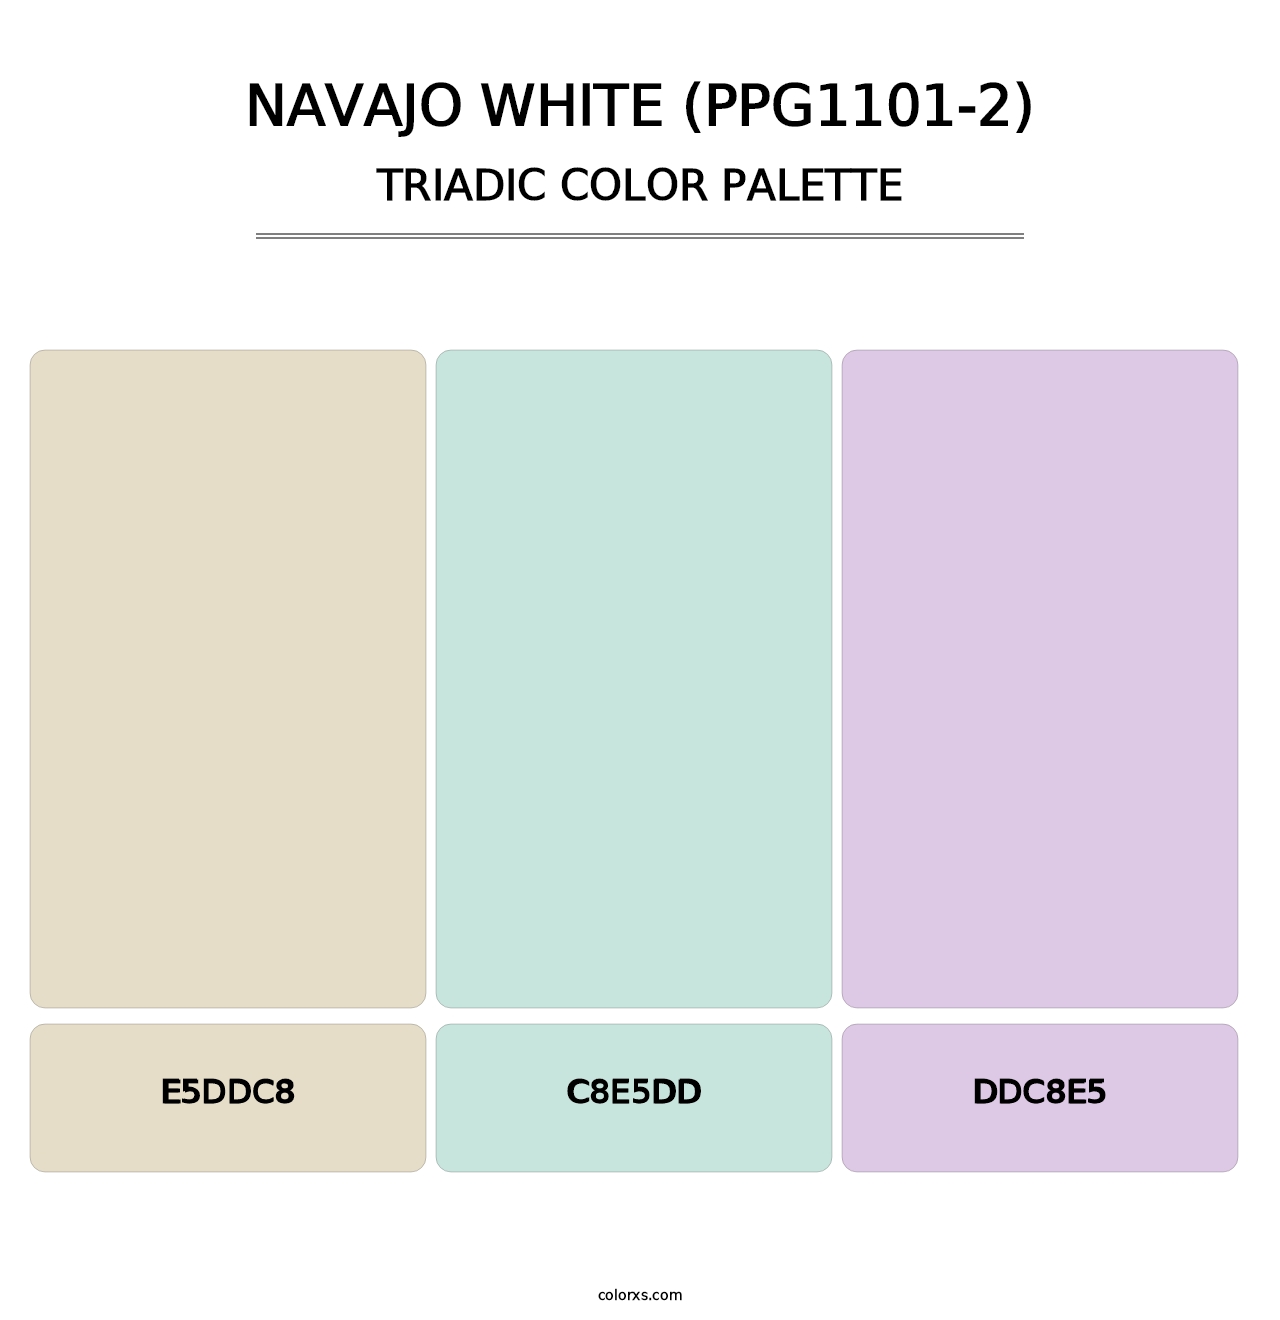 Navajo White (PPG1101-2) - Triadic Color Palette